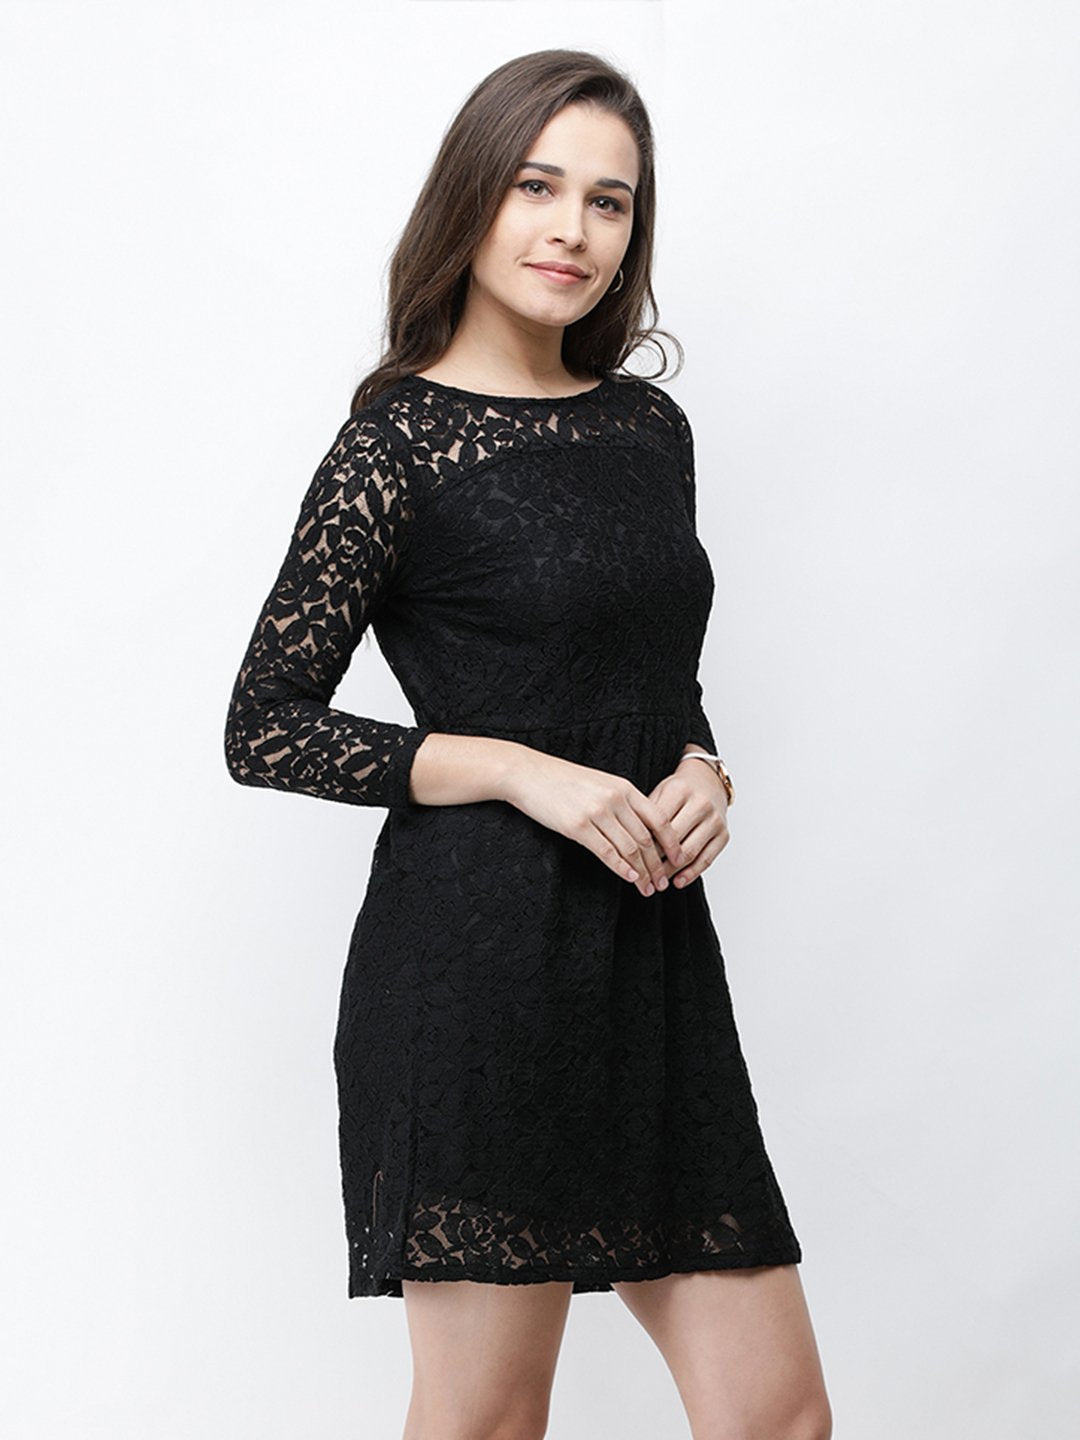 Cation Black Lace Dress